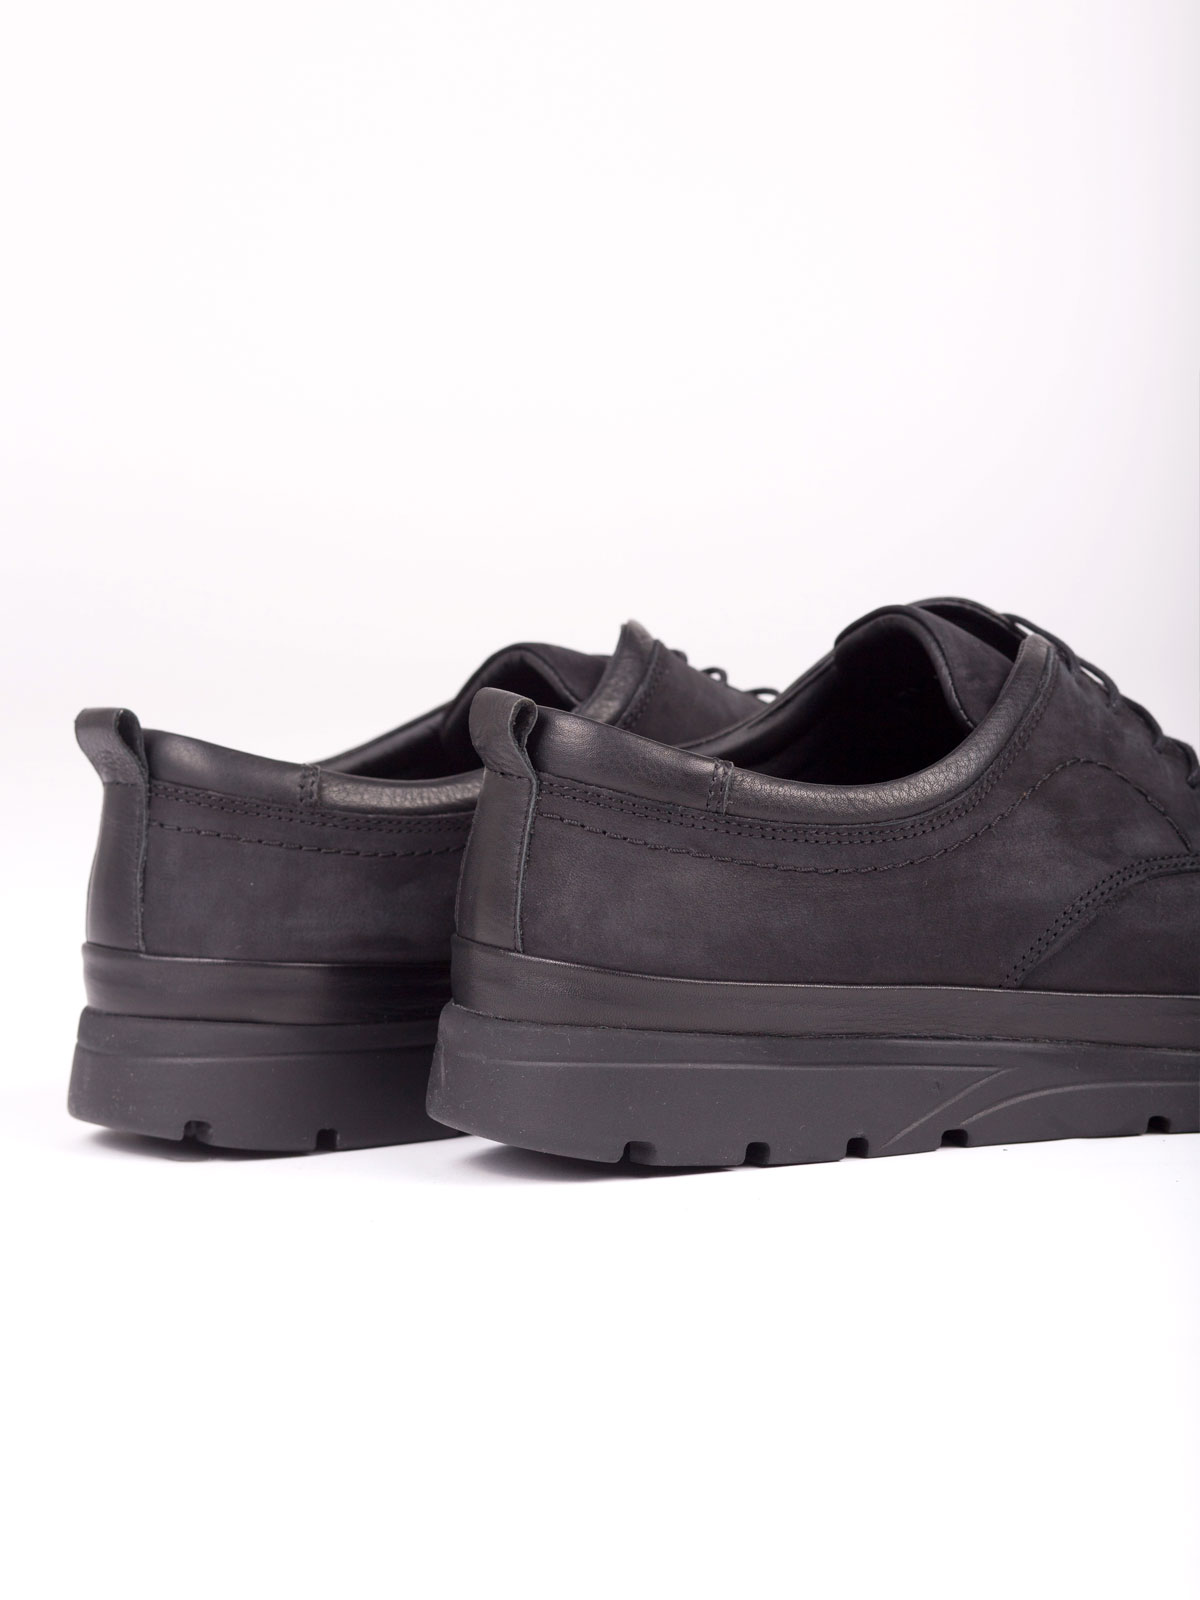 Pantofi de piele intoarsa neagra - 81027 - € 24.75 img2